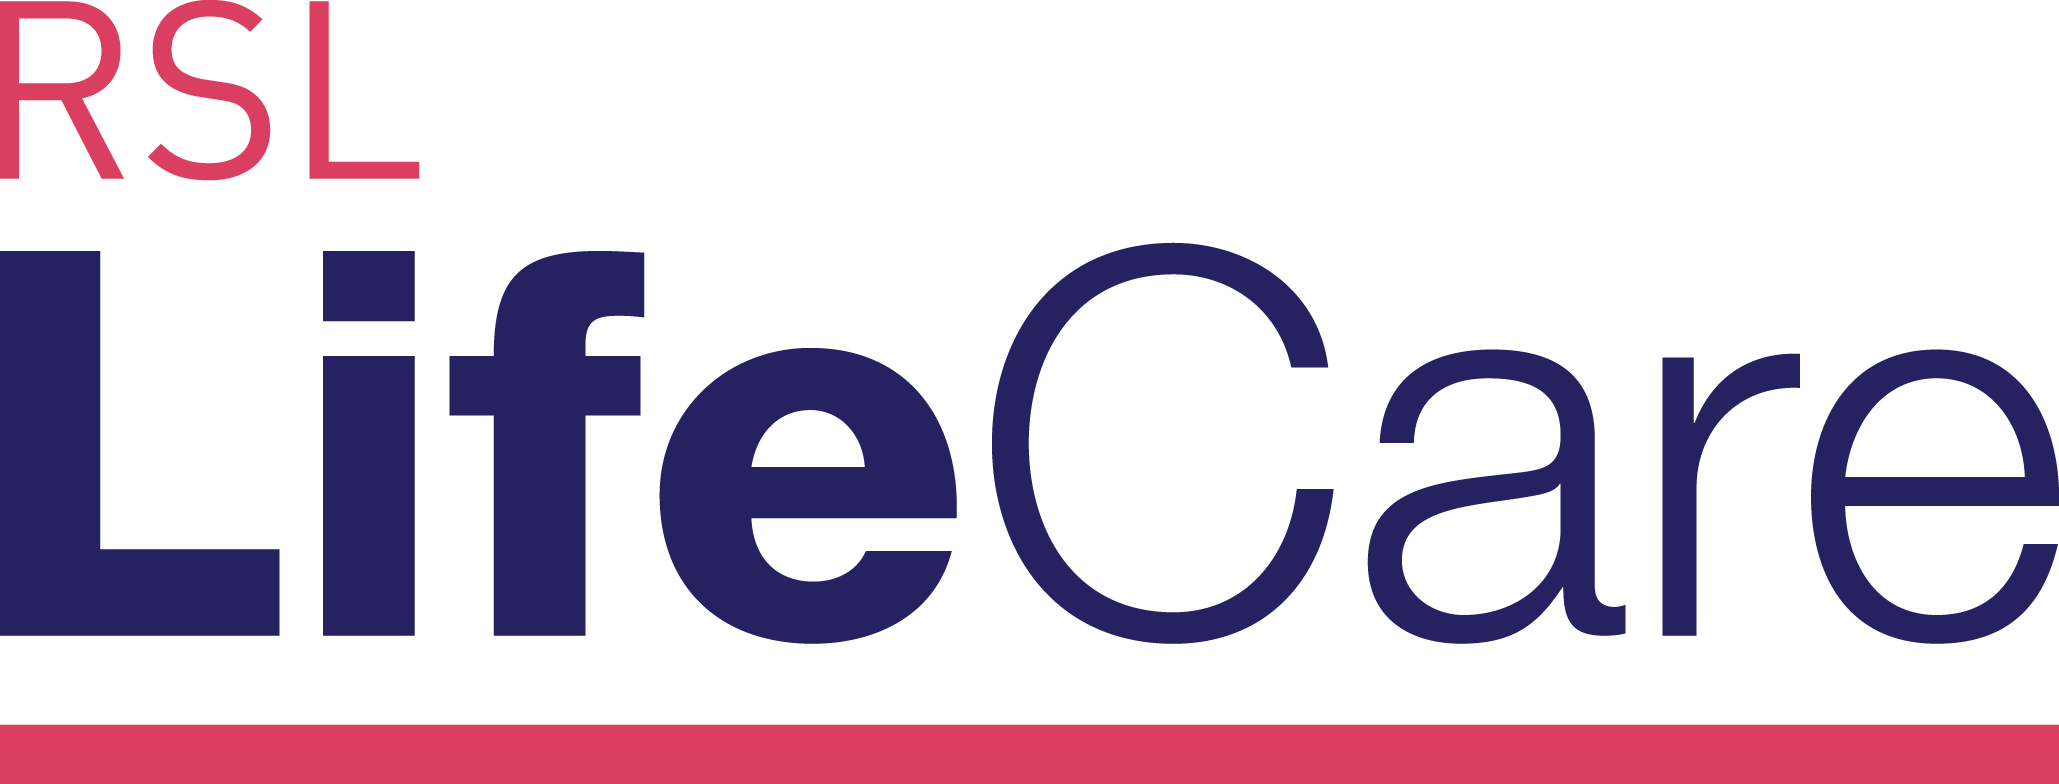 RSL LifeCare Fred Ward Gardens logo